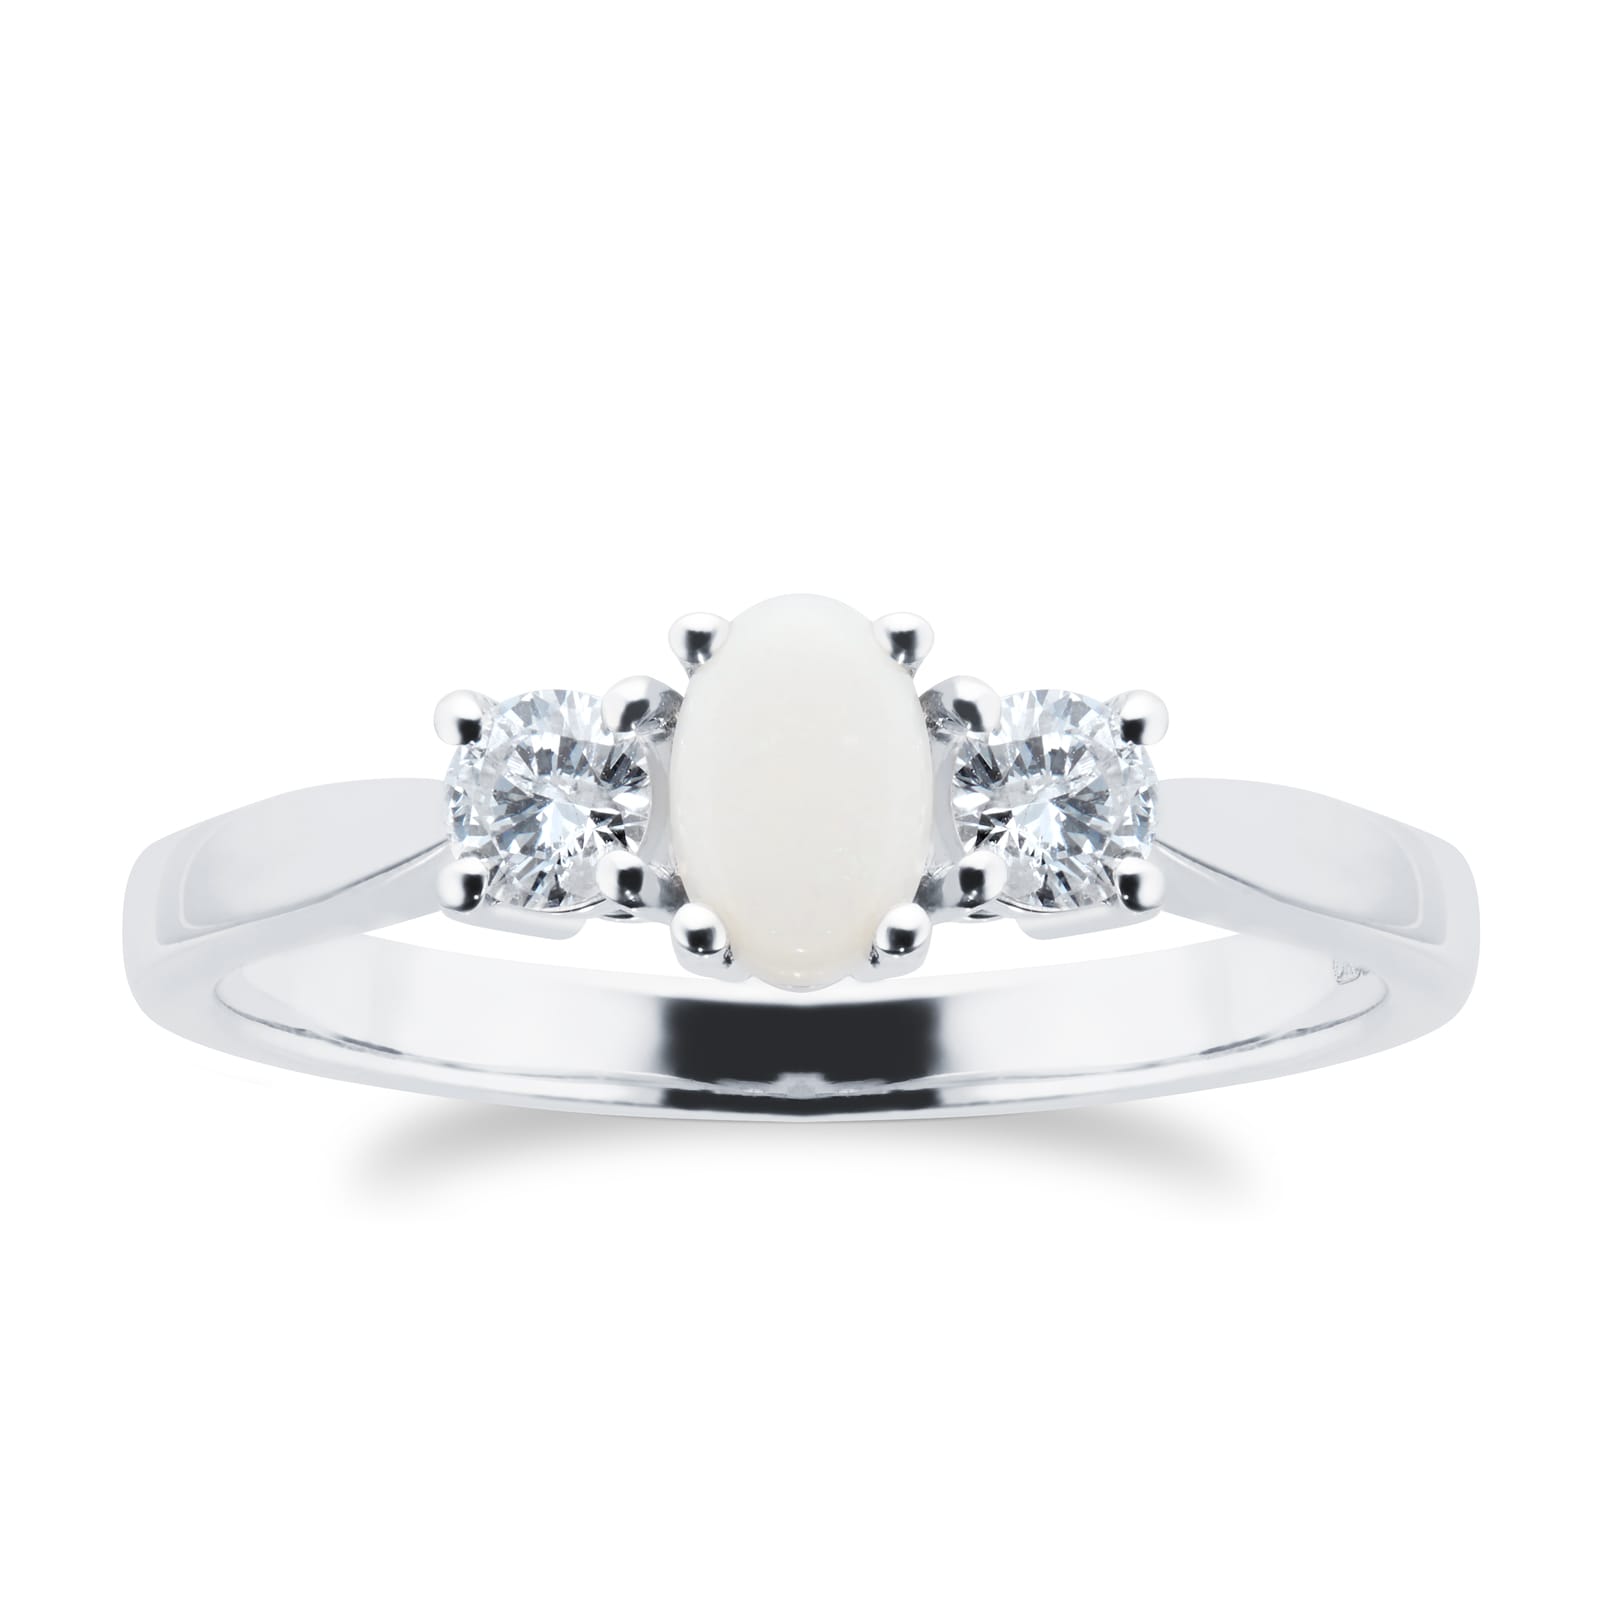 9ct White Gold 3 Stone Opal & Diamond Ring - Ring Size M.5